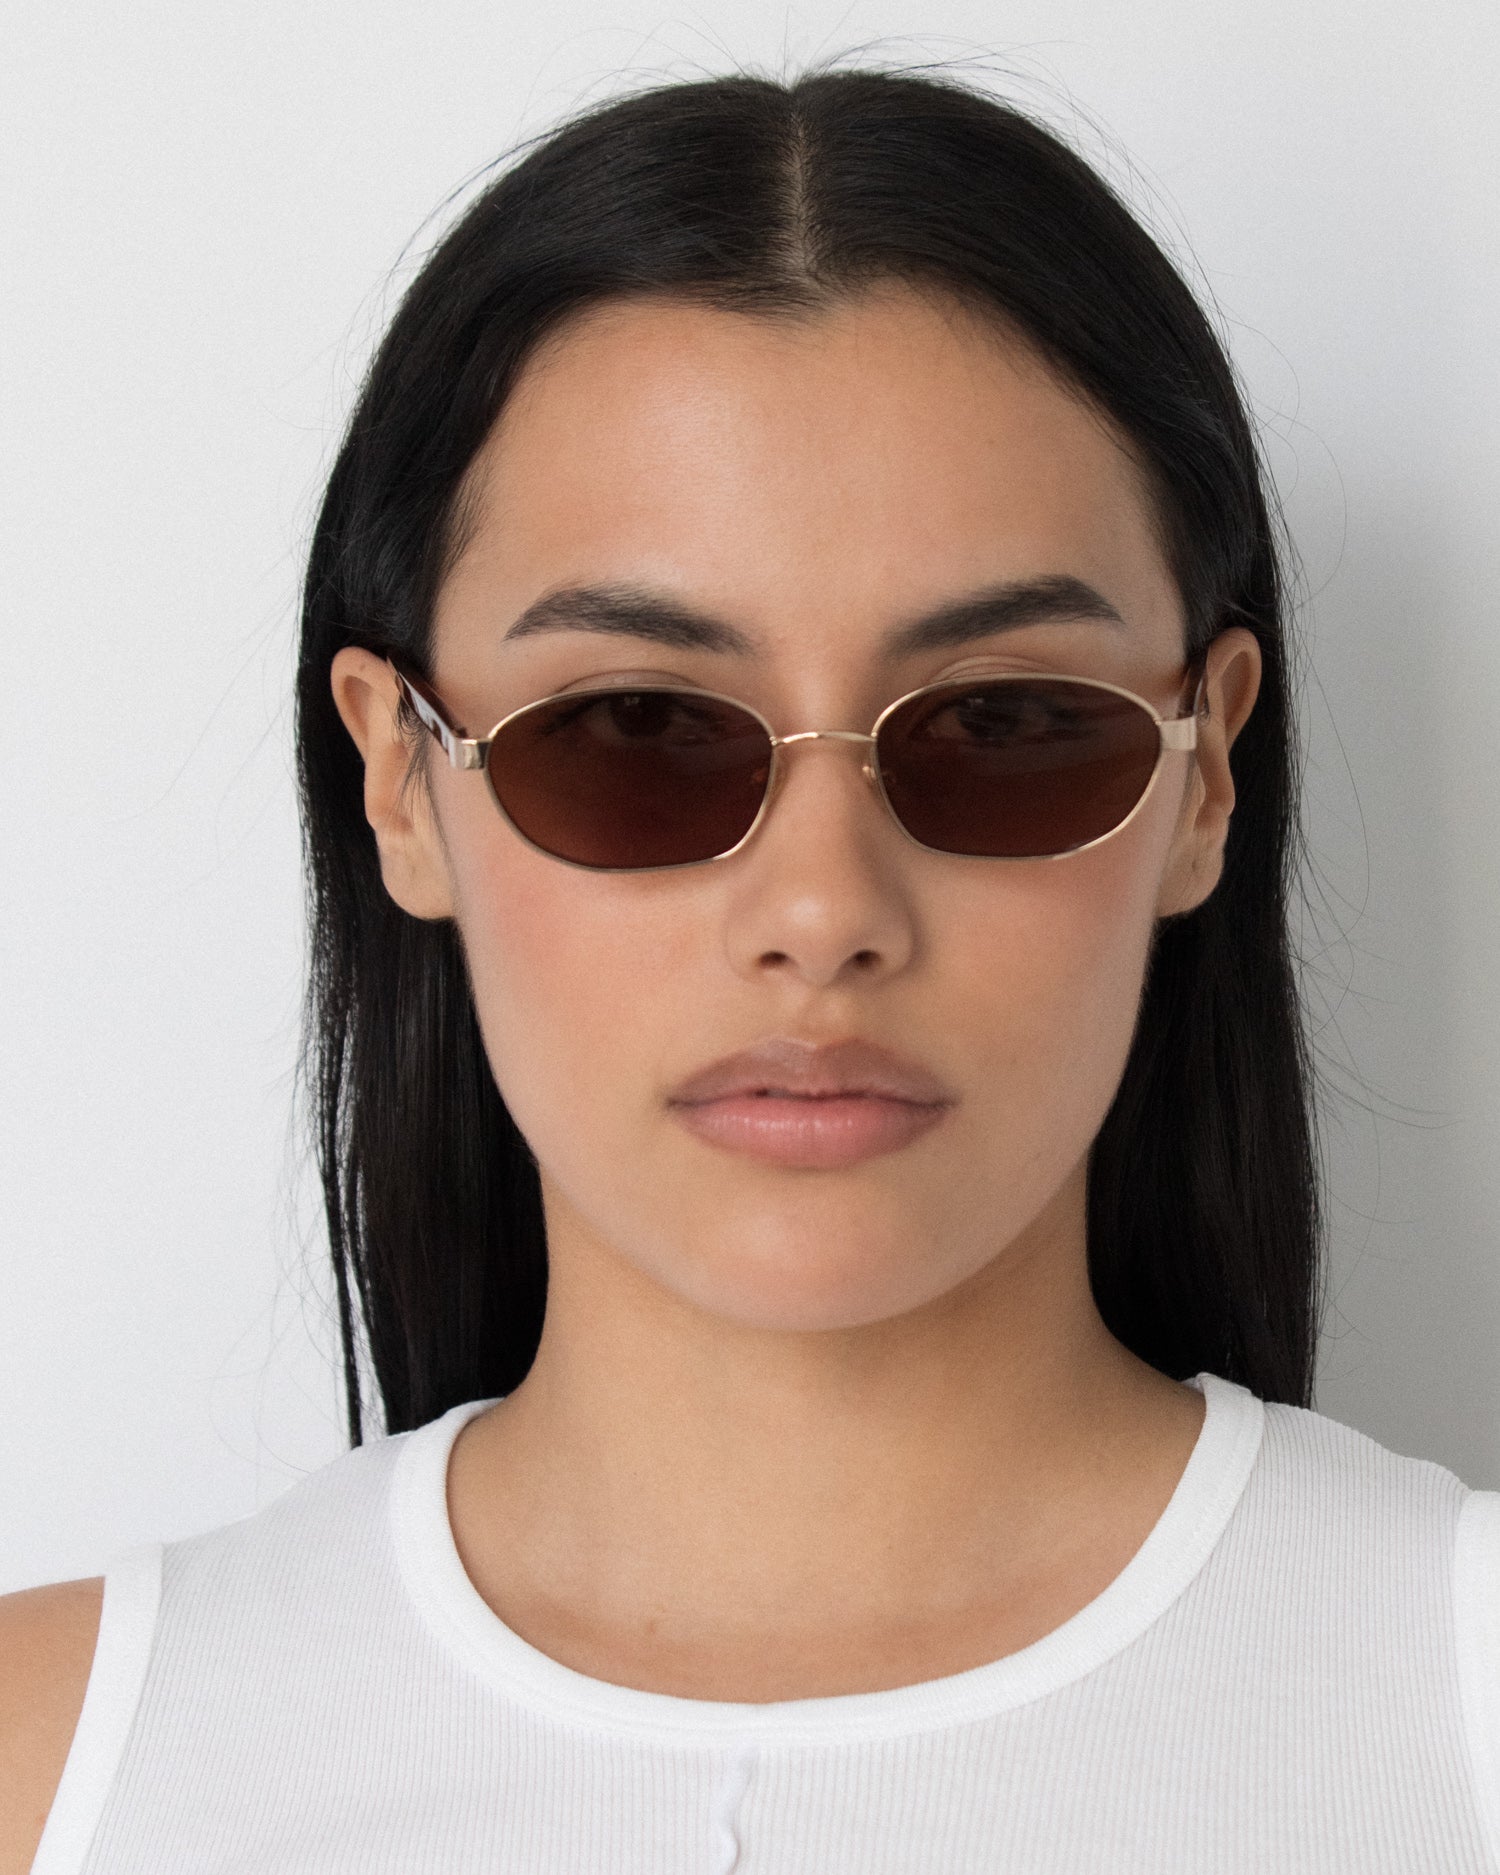 Lara Sunglasses in Chestnut by LU GOLDIE Eyewear